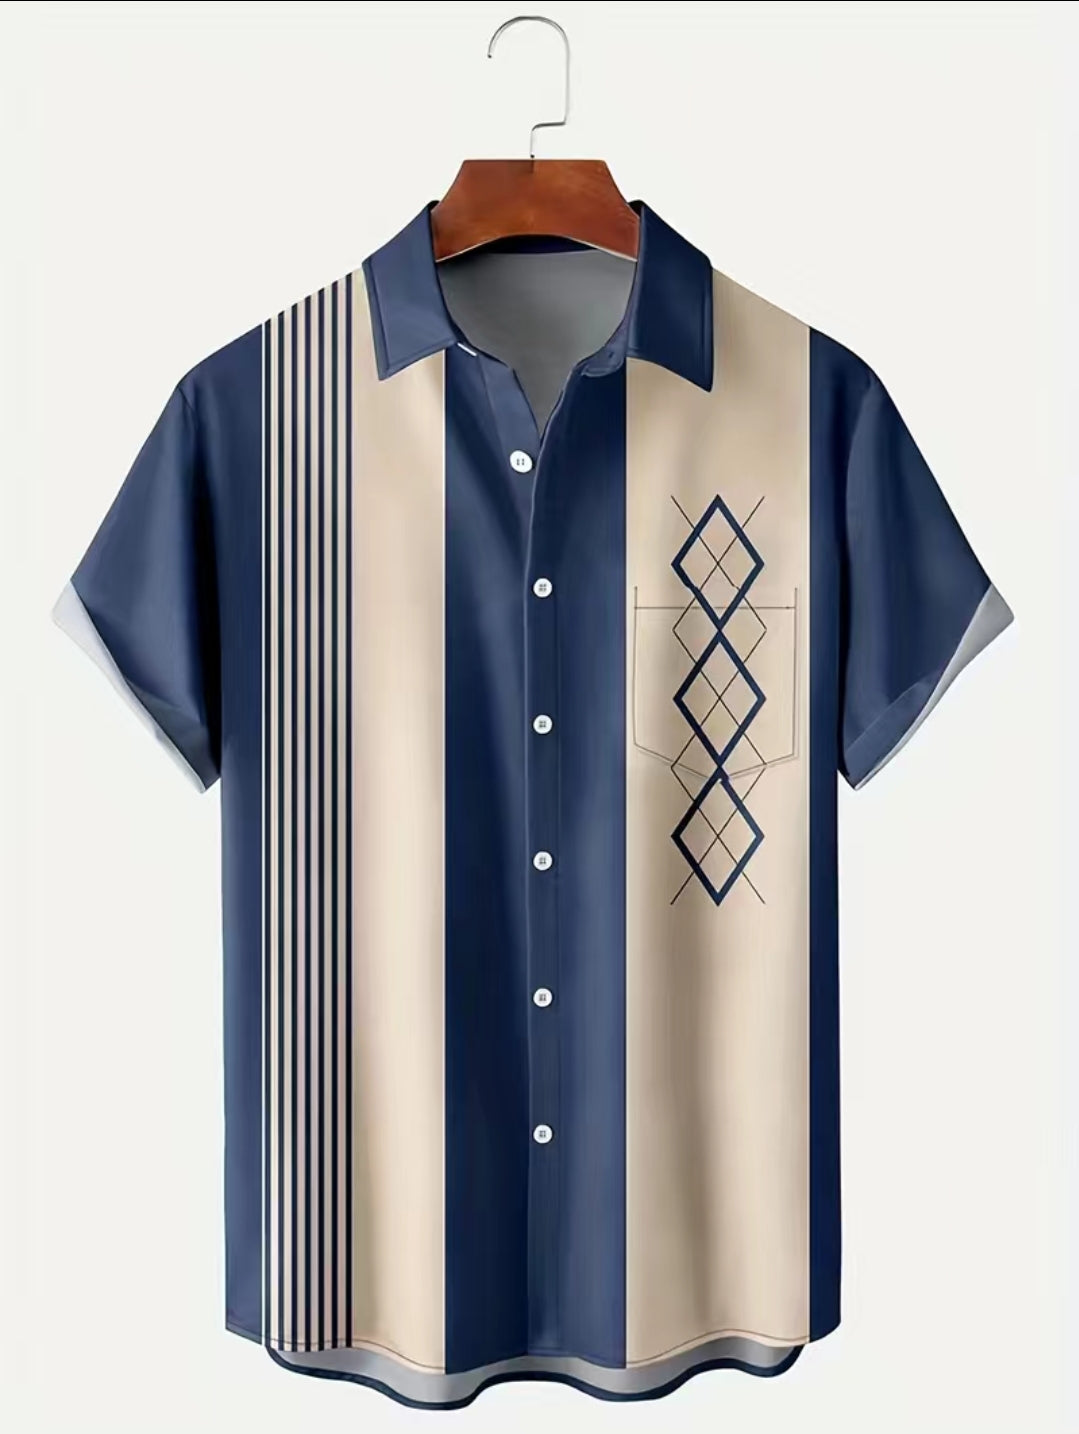 Geometric Vintage Style Button Up Shirt